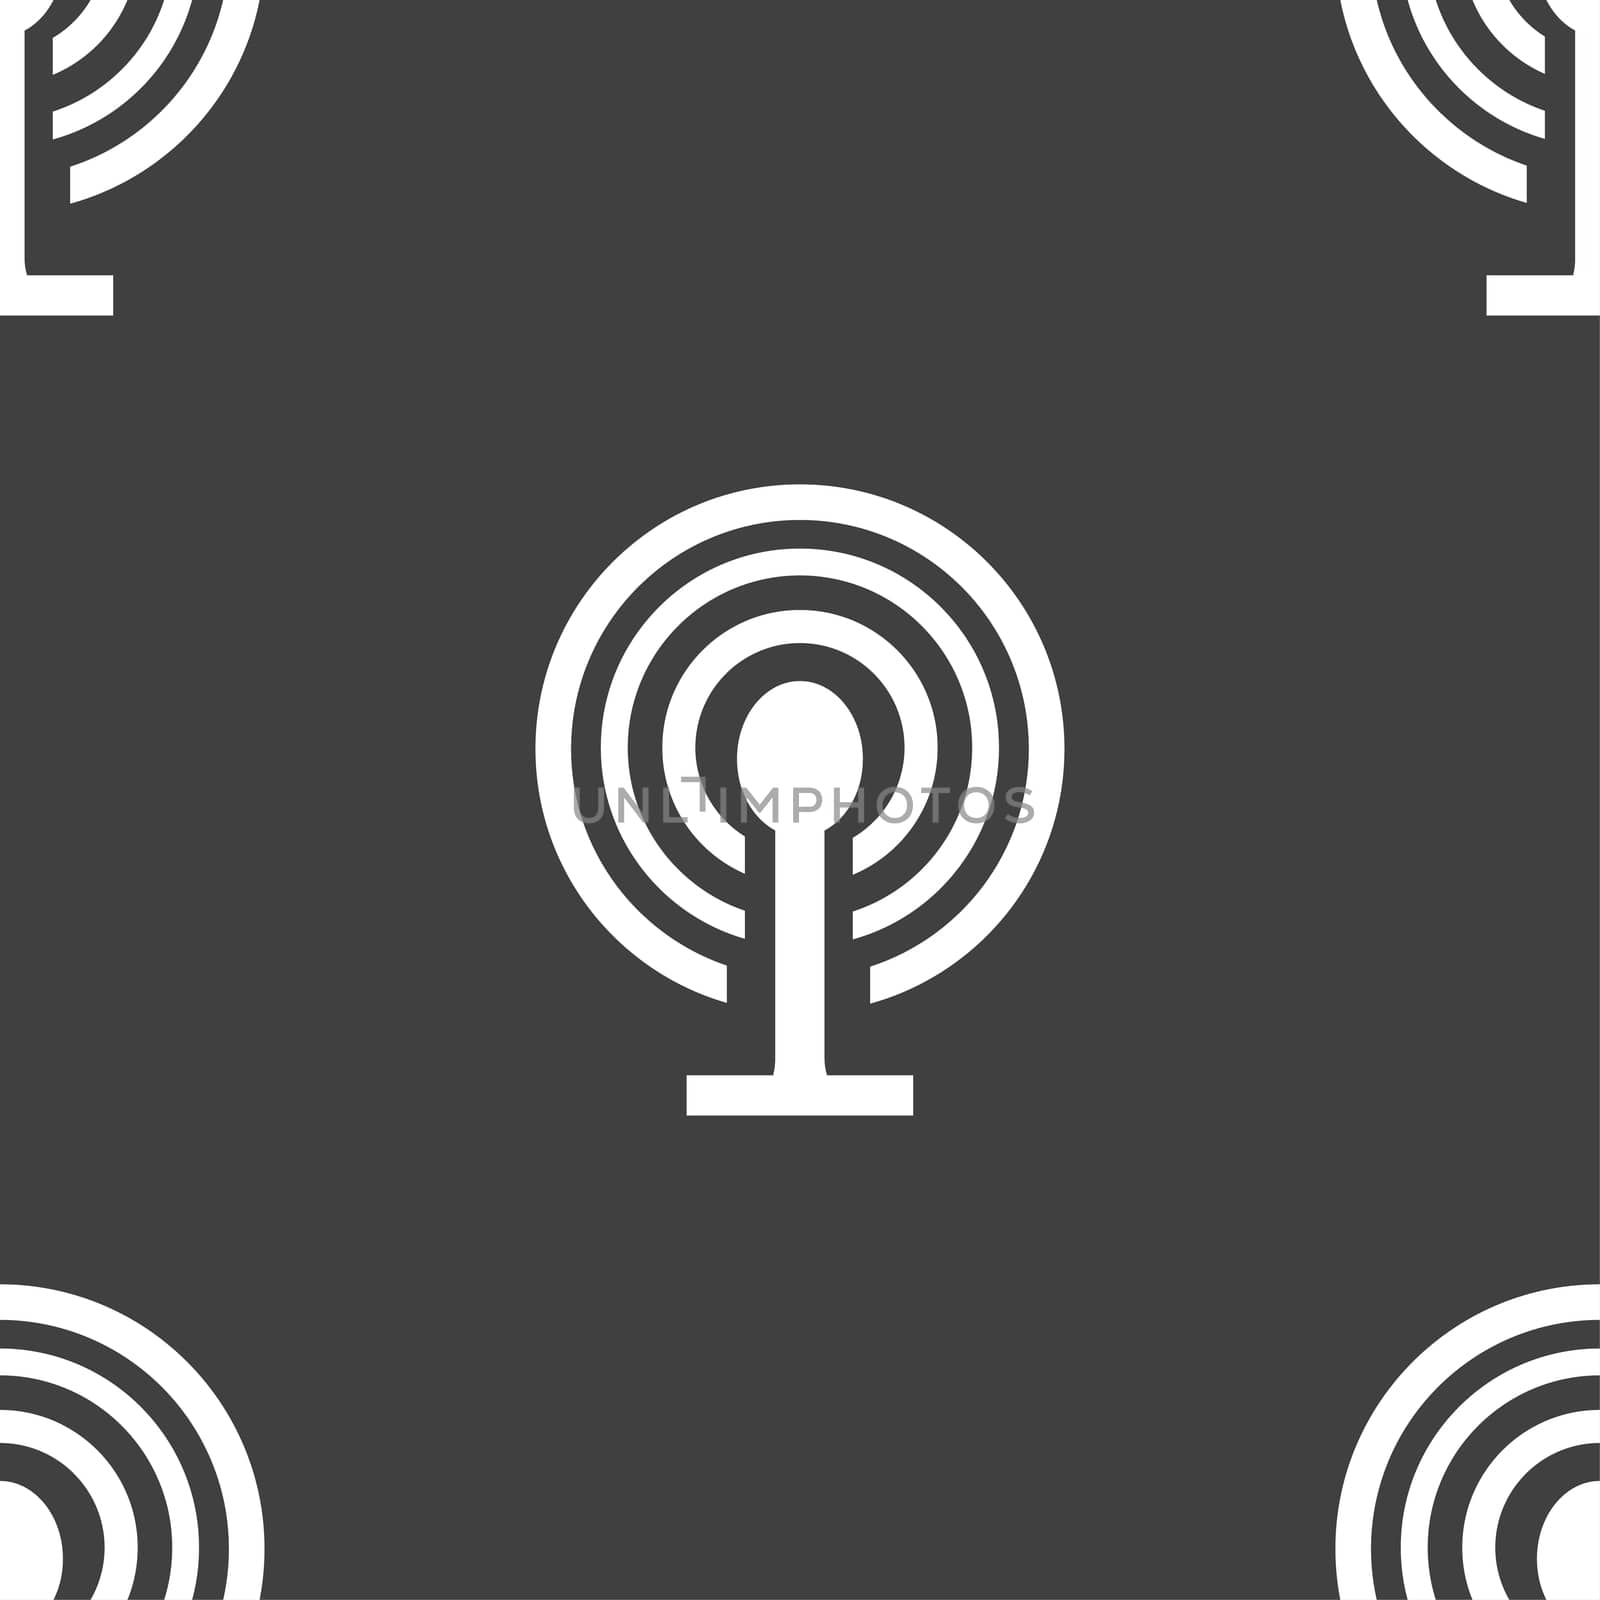 Wifi sign. Wi-fi symbol. Wireless Network icon zone. Seamless pattern on a gray background. illustration